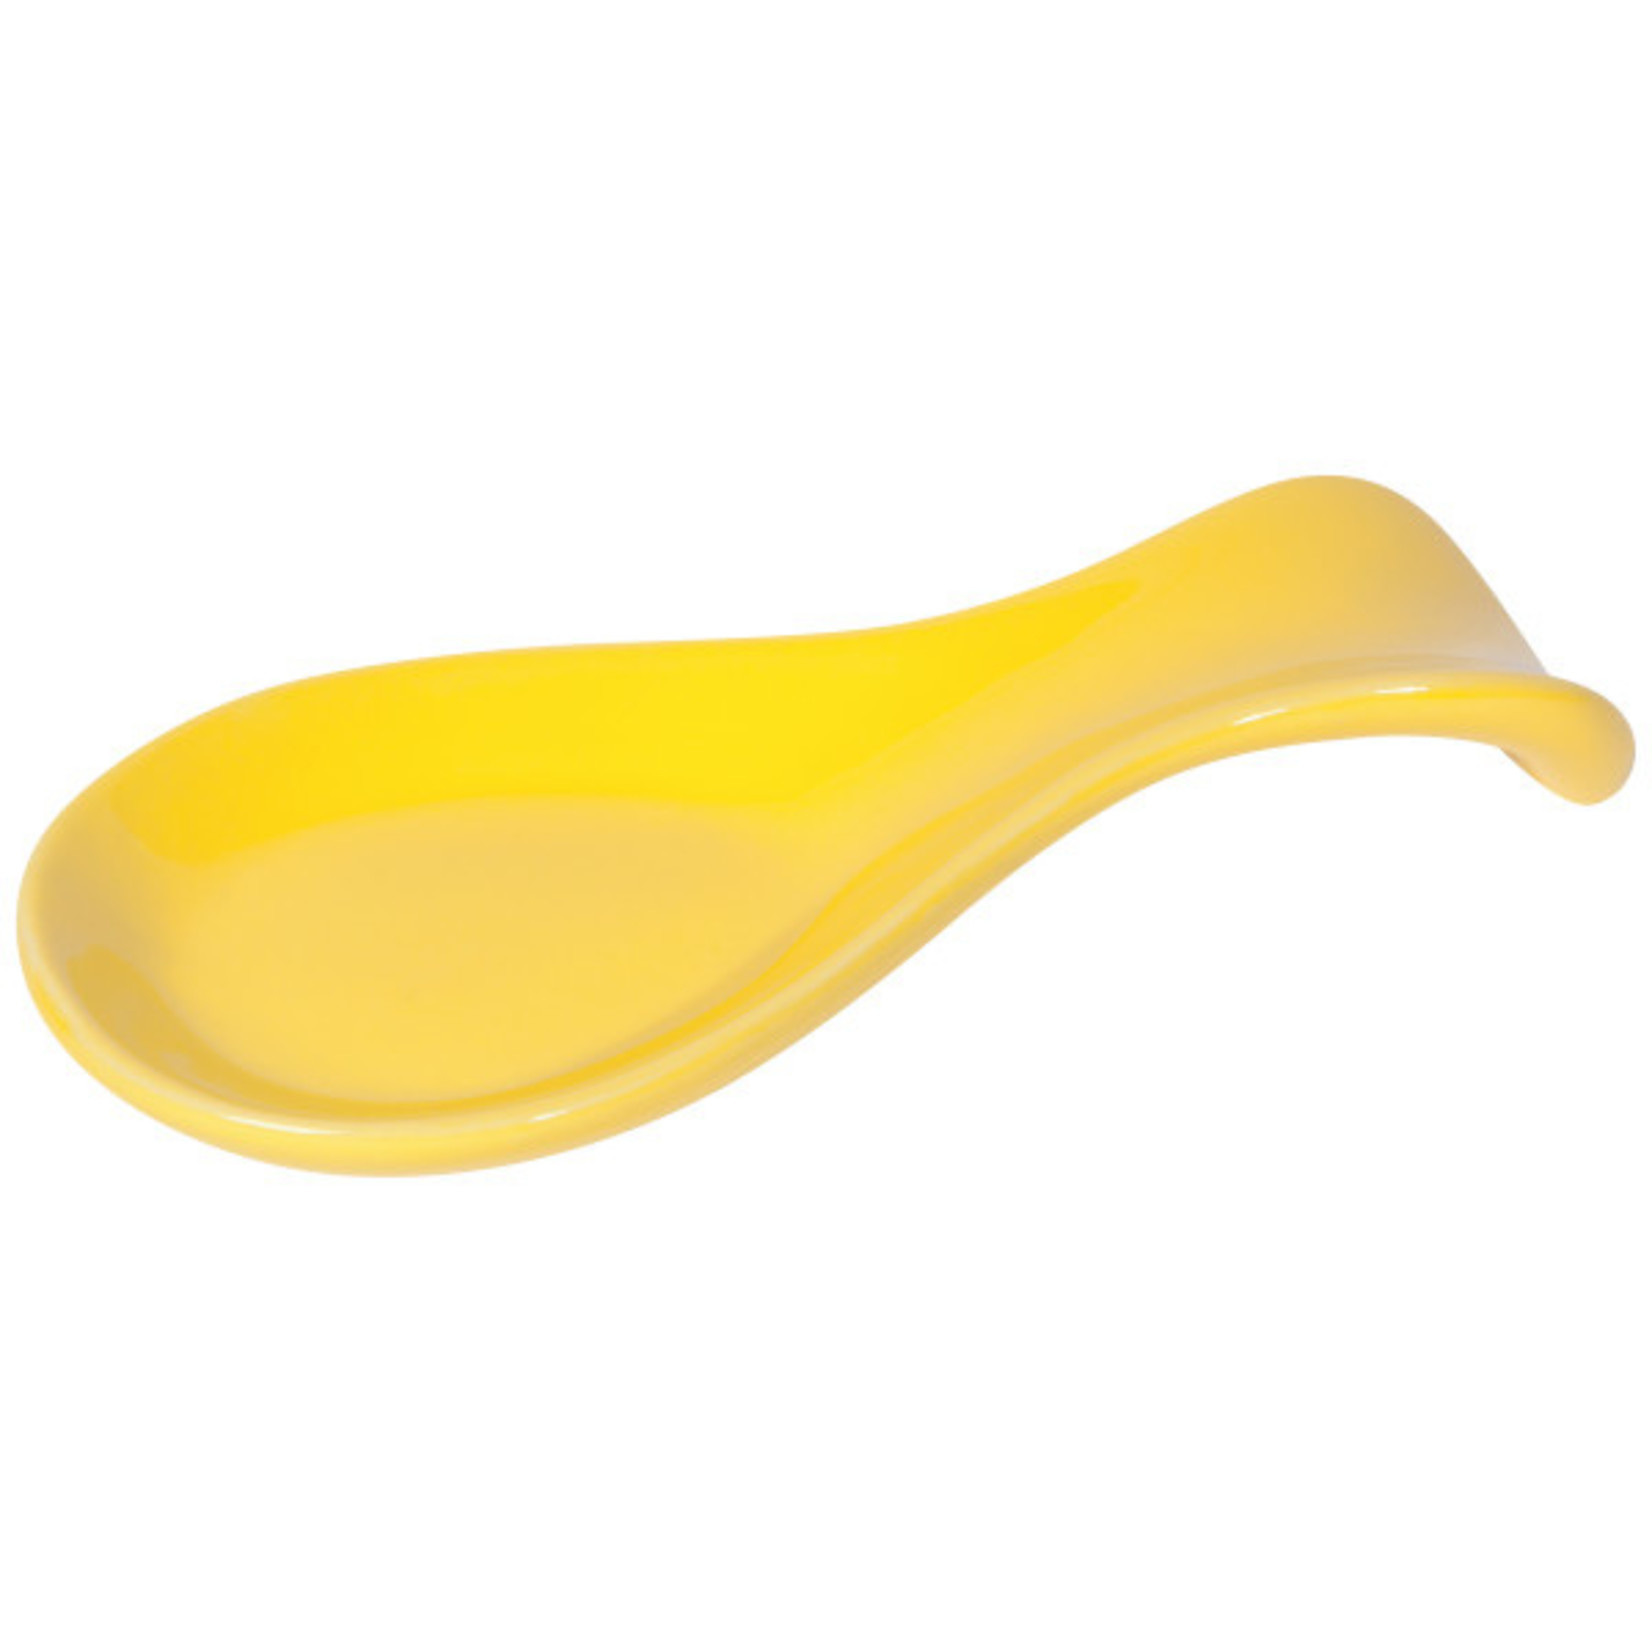 Spoon Rest - Yellow